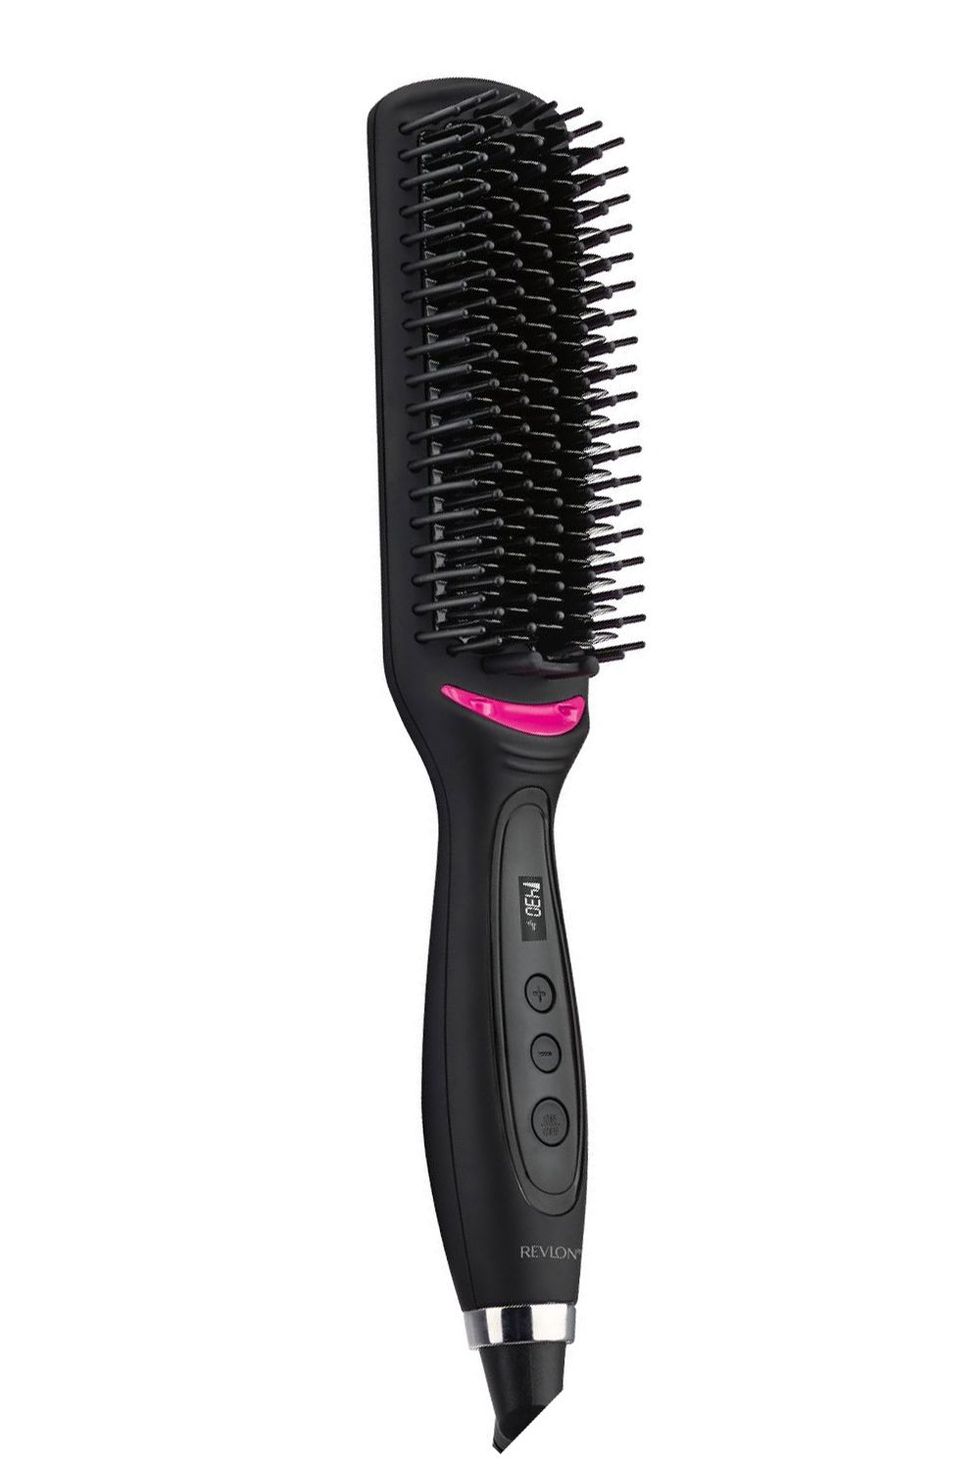 Buy Hot Air Brush Pink-3 in 1 Straightening Brush - Couture Hair Pro